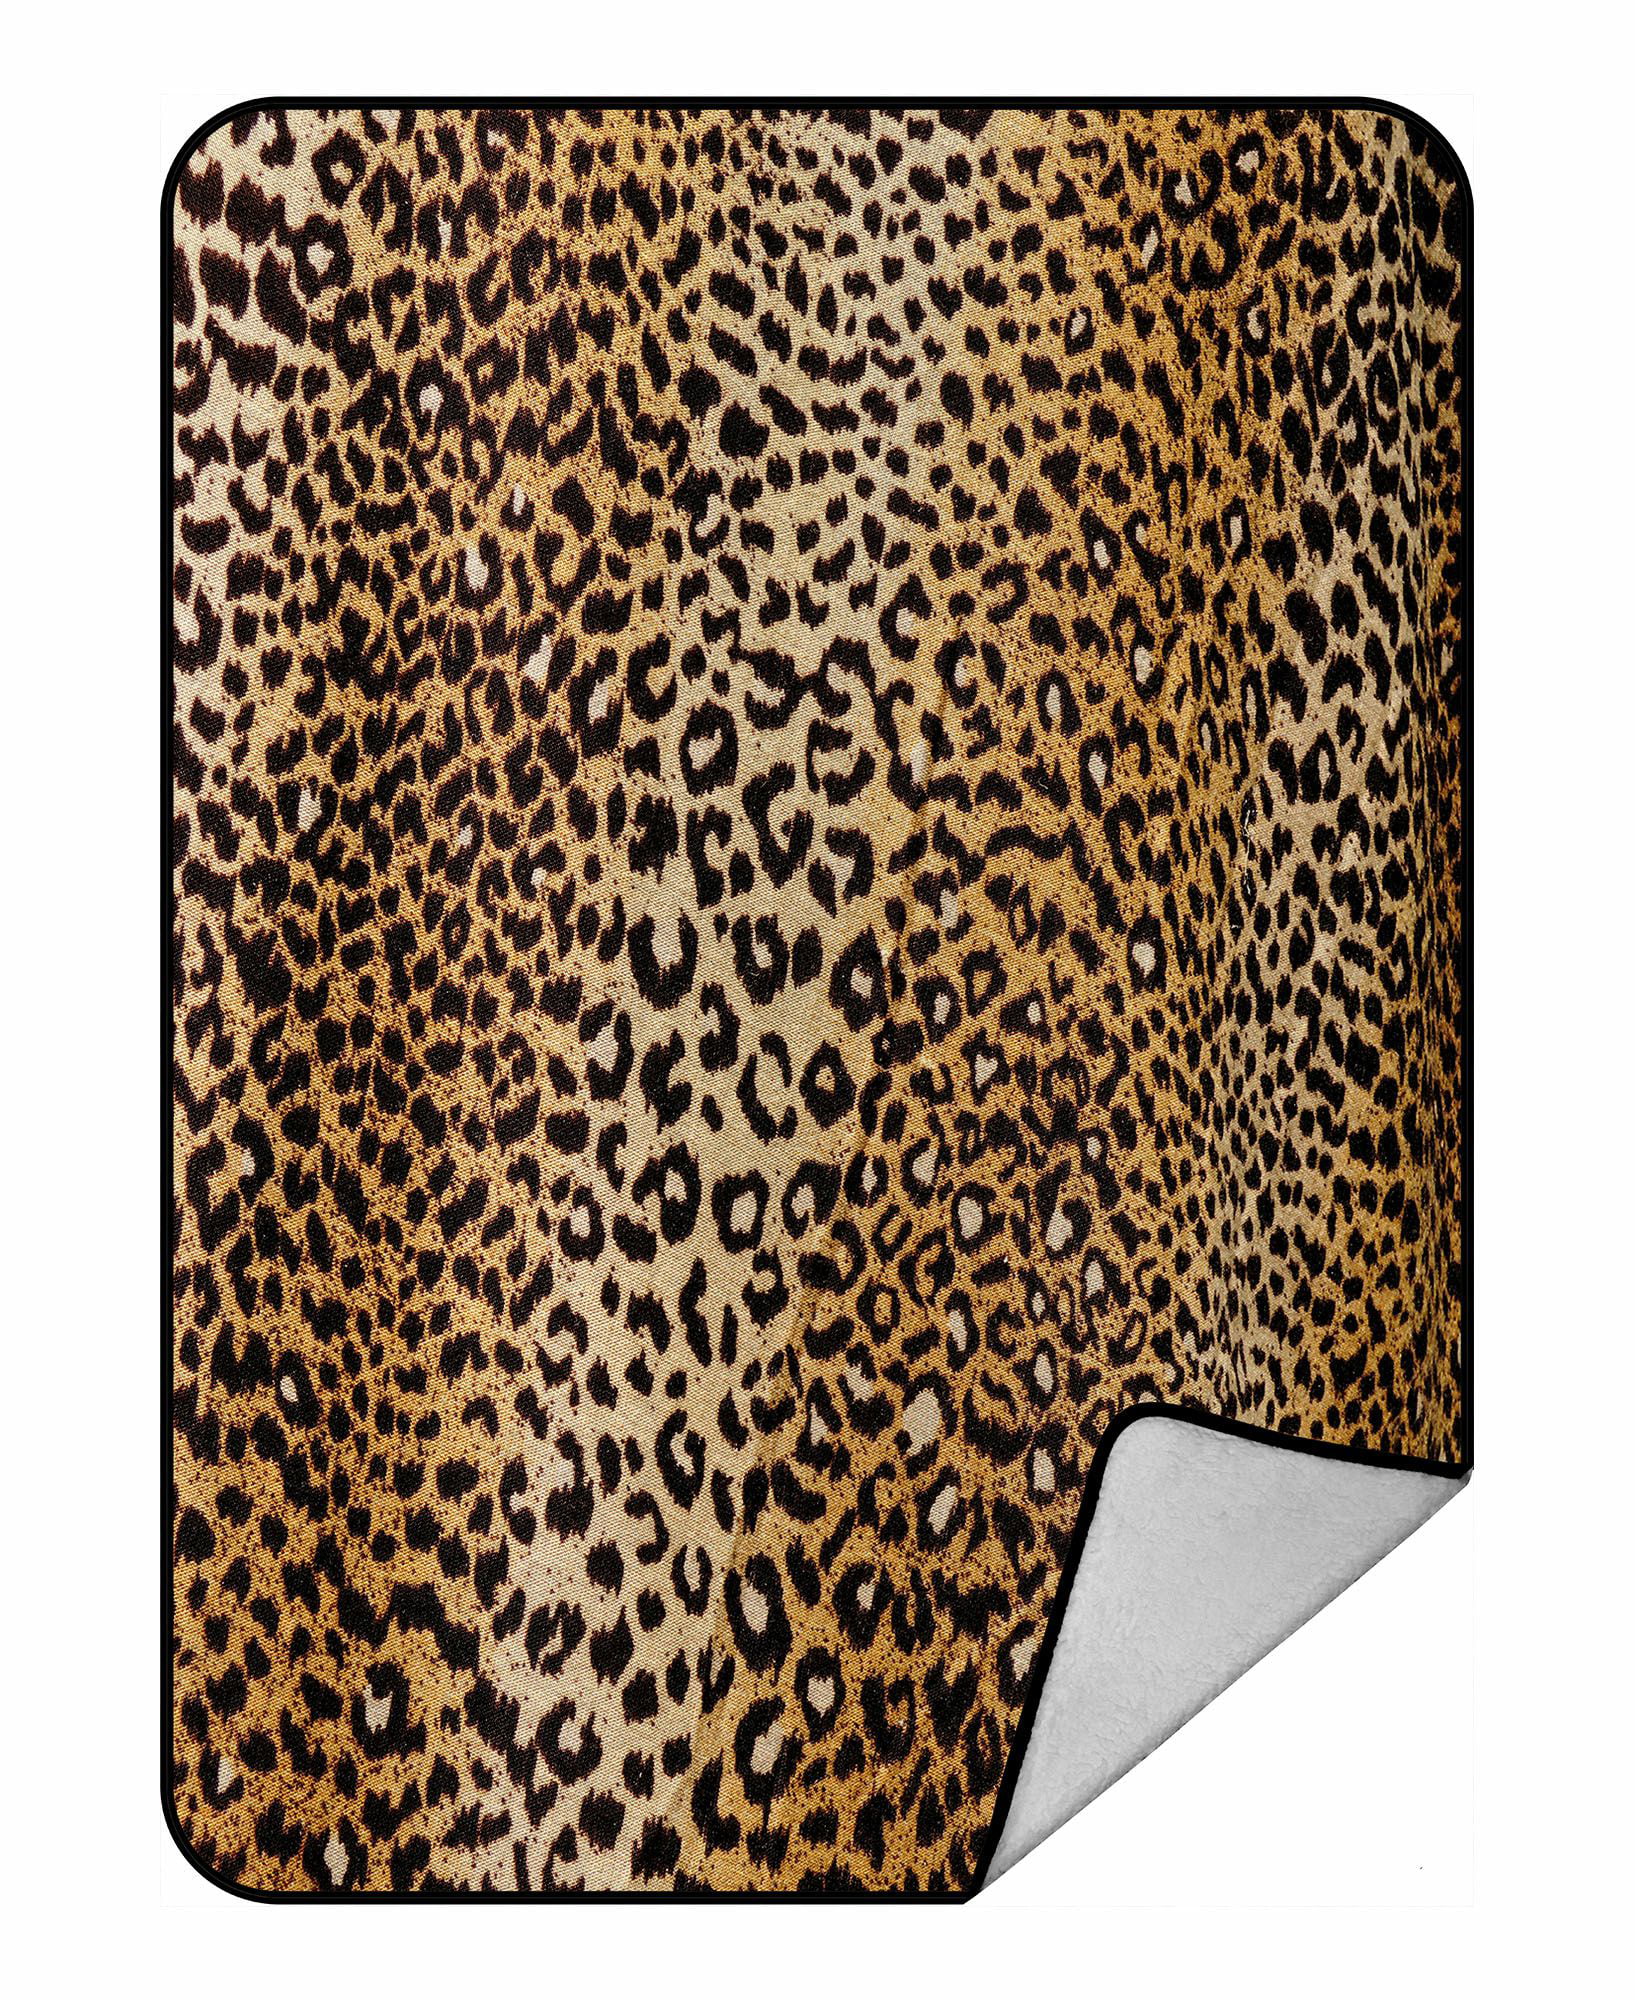 ABPHQTO Leopard Fleece Blanket Fleece Back Throw Blanket 58x80 Inch ...